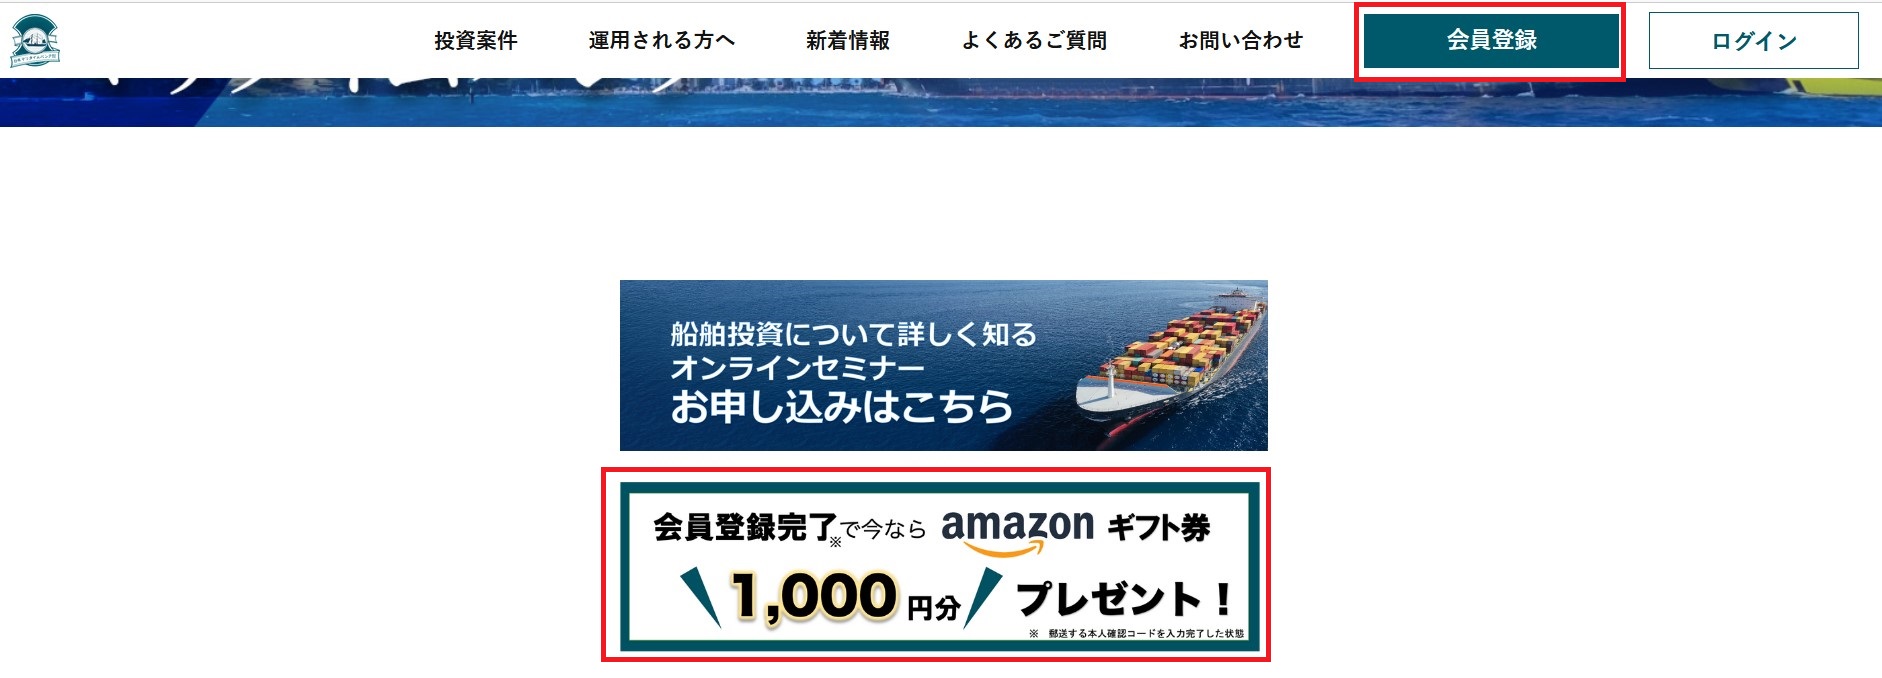 Amazonギフト券 1,000円がもらえるキャンペーン実施中！Maritime Bank（マリタイムバンク）!日本初の融資型クラウドファンディングに『日本初の船舶投資』が登場！【資産運用】